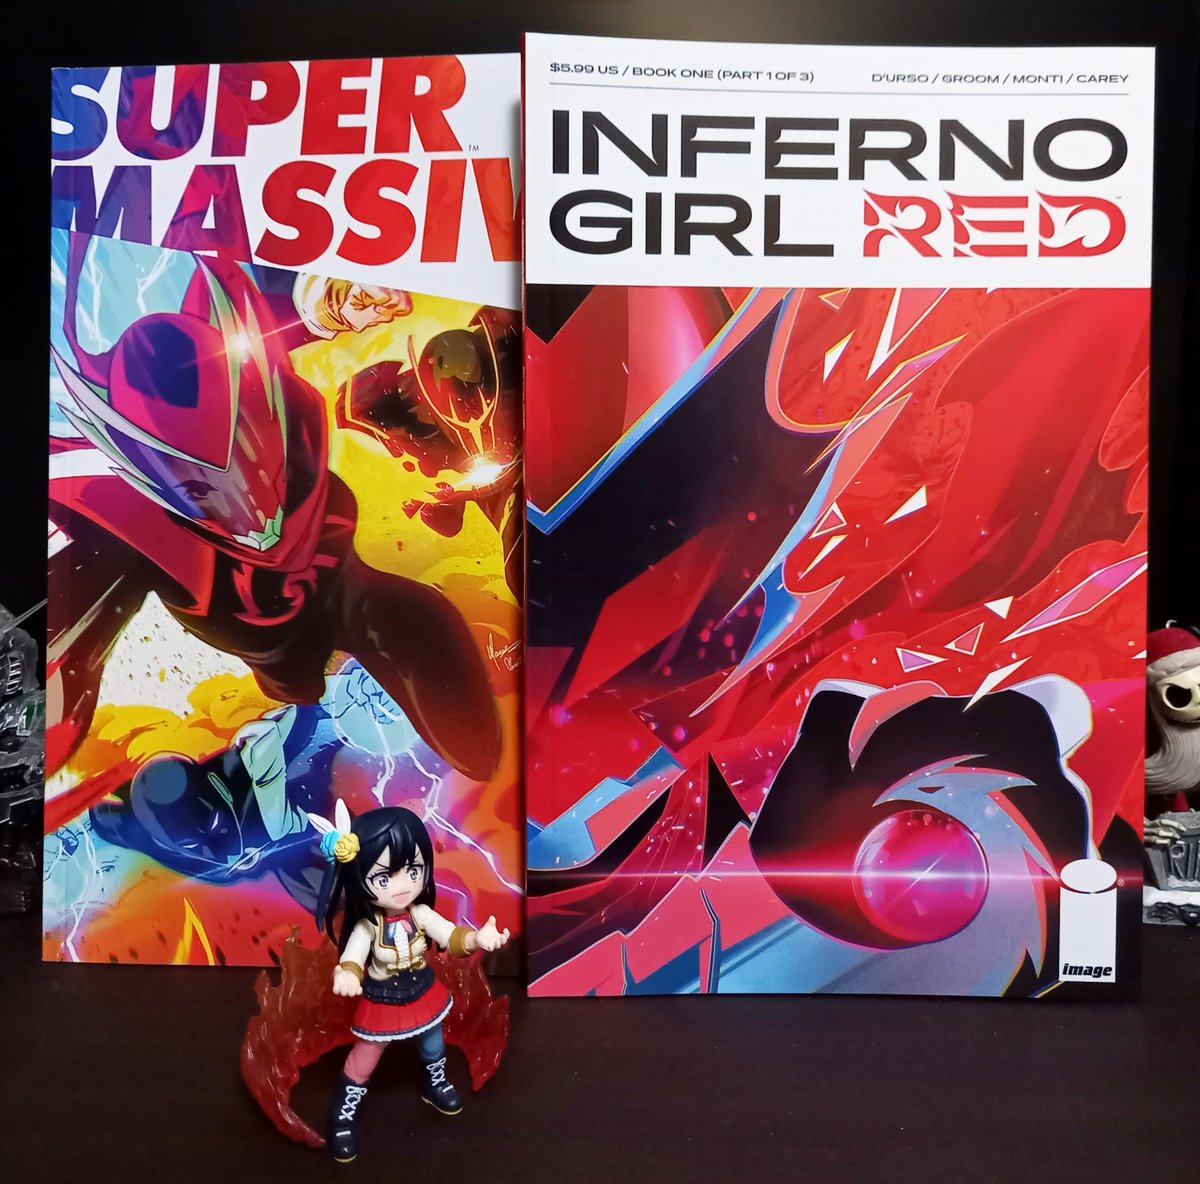 I got INFERNO GIRL RED#1．I've waited for this moment. #InfernoGirlRed #MassiveVerse